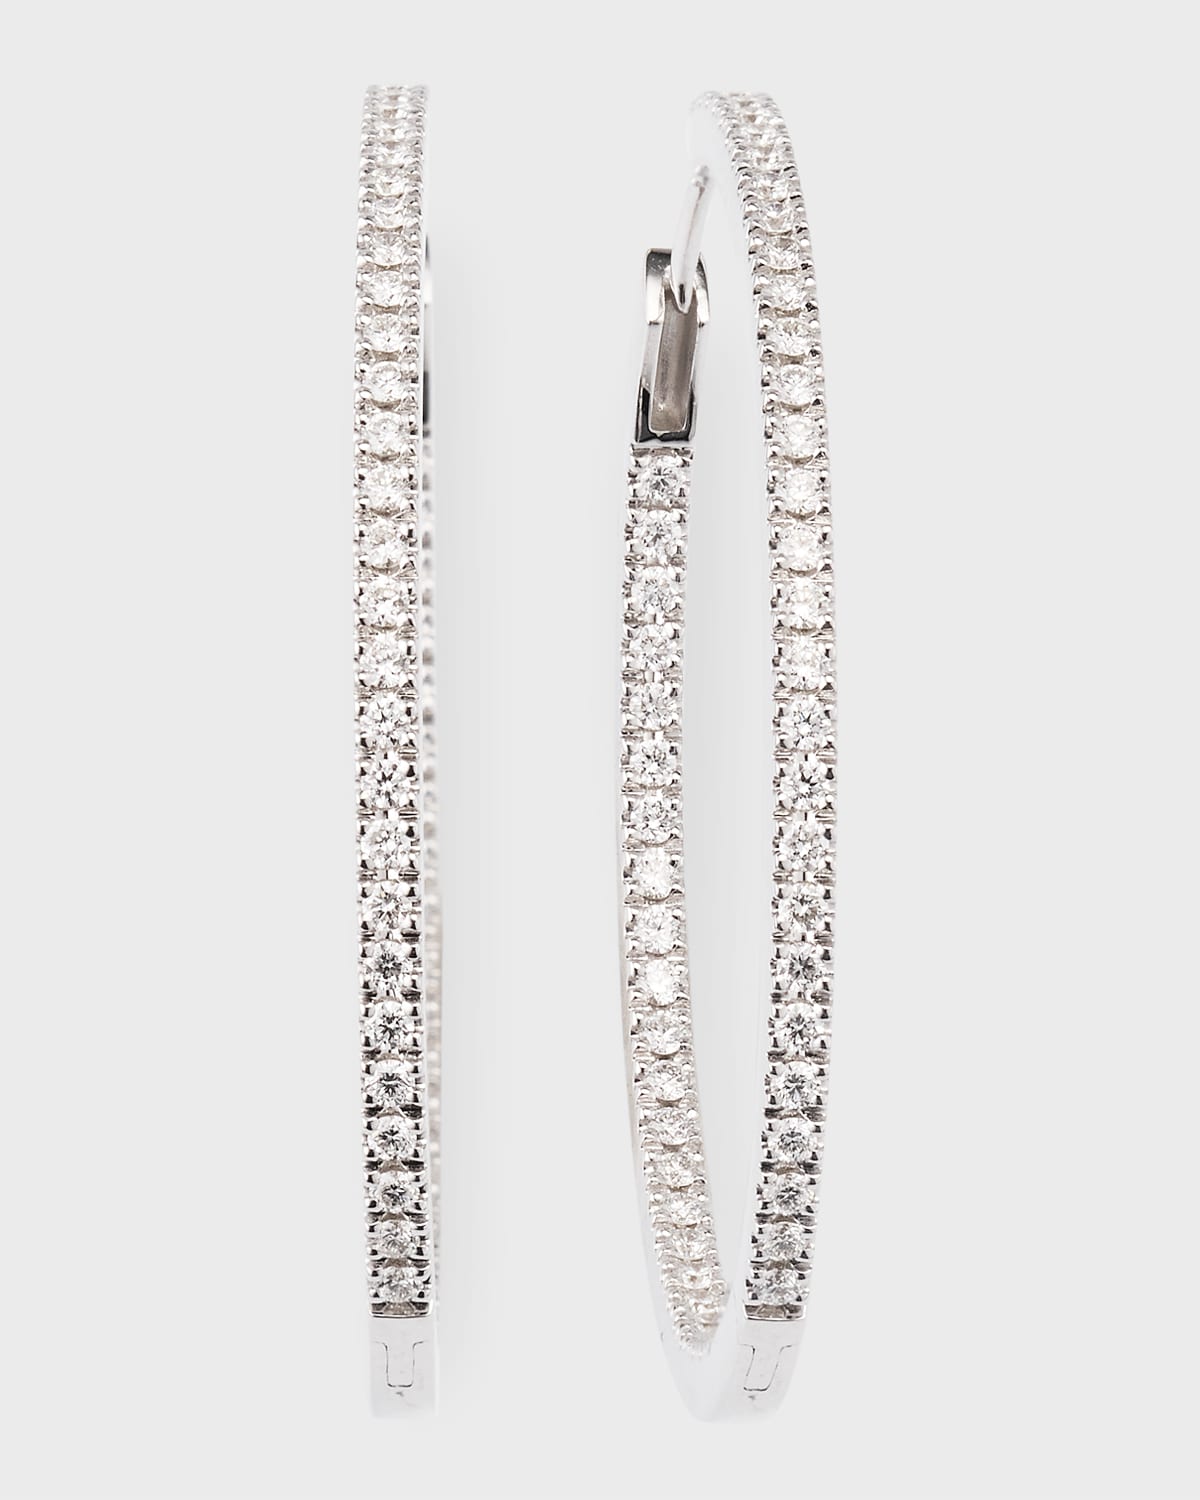 18K White Gold & Diamond Infinity Hoop Earrings, 1.25 tdcw